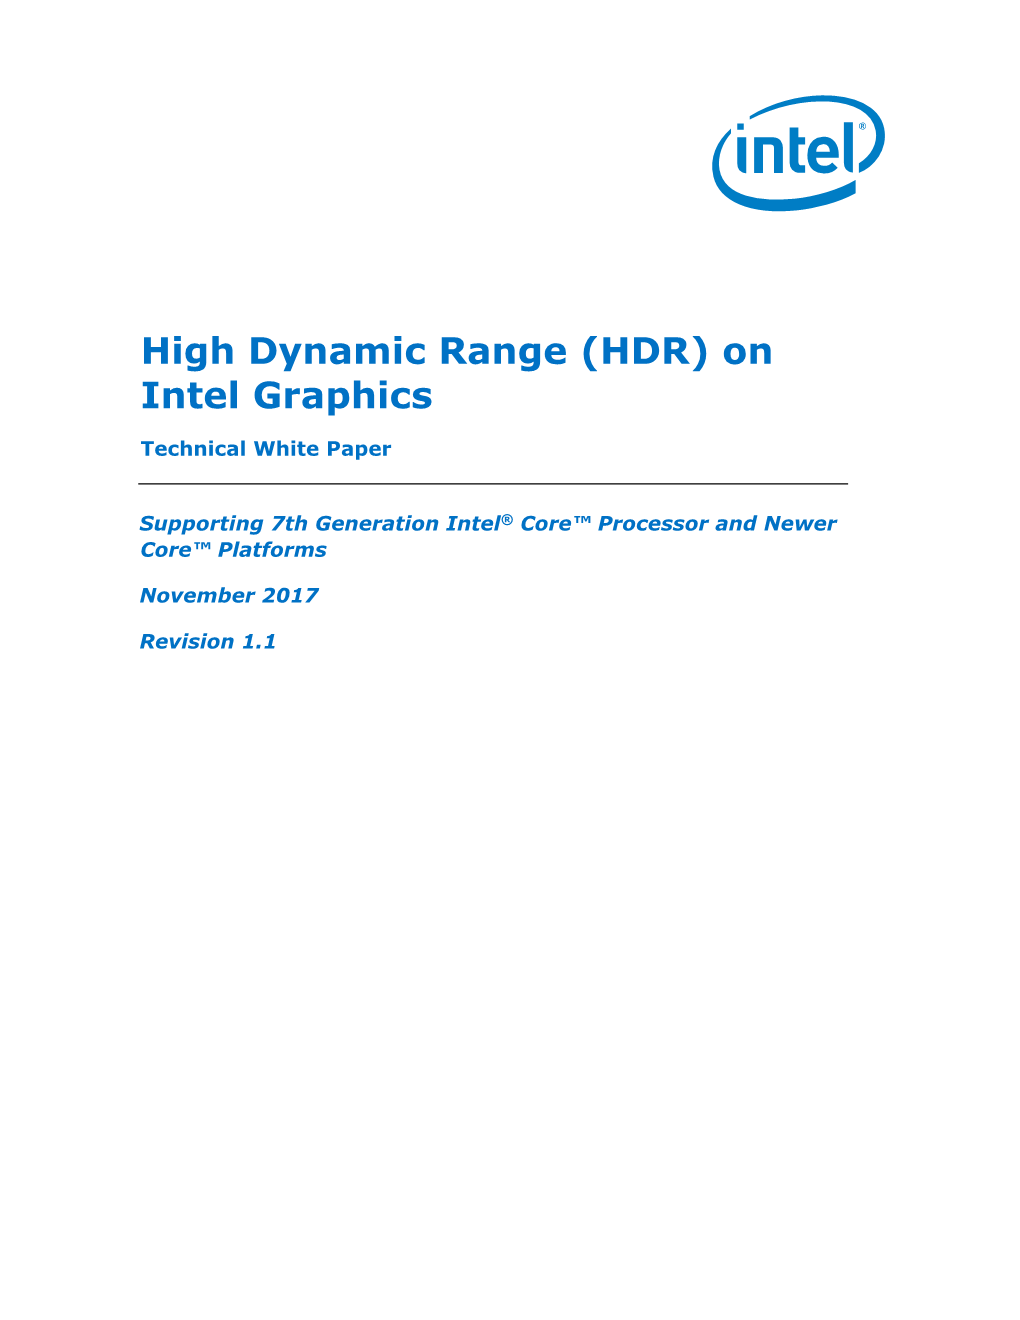 High Dynamic Range (HDR) on Intel Graphics